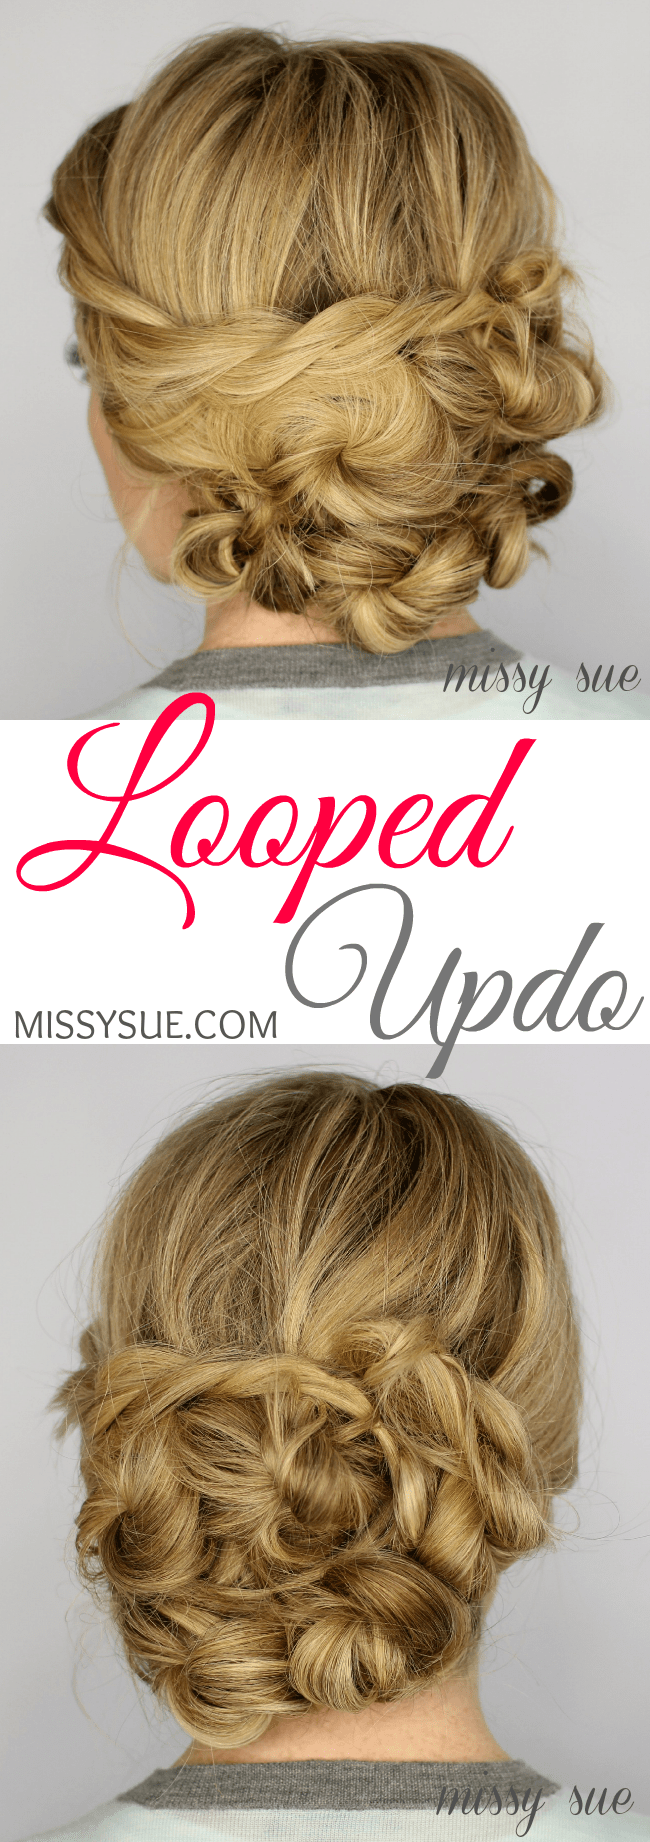 Looped Updo | MissySue.com